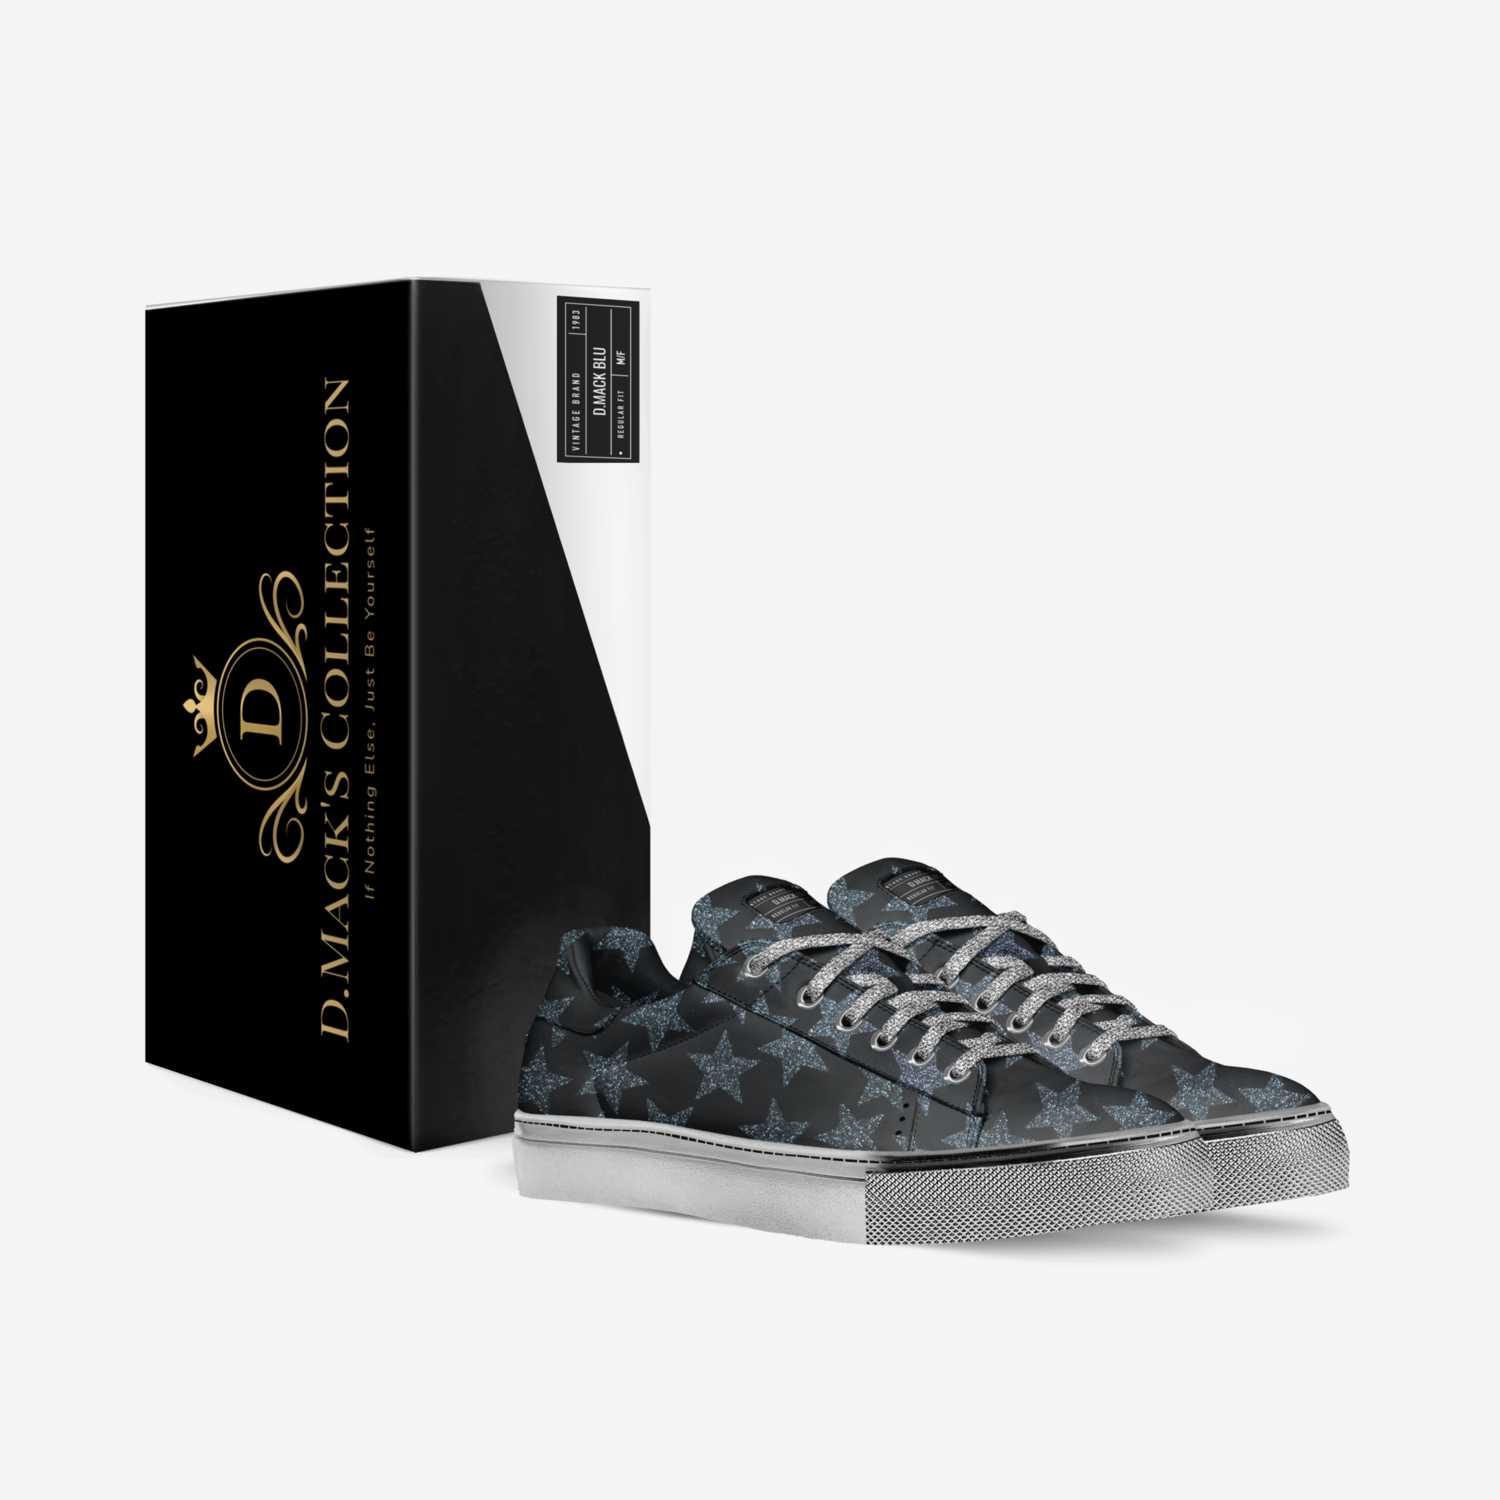 D.Mack Blu custom made in Italy shoes by Douglas Jones | Box view